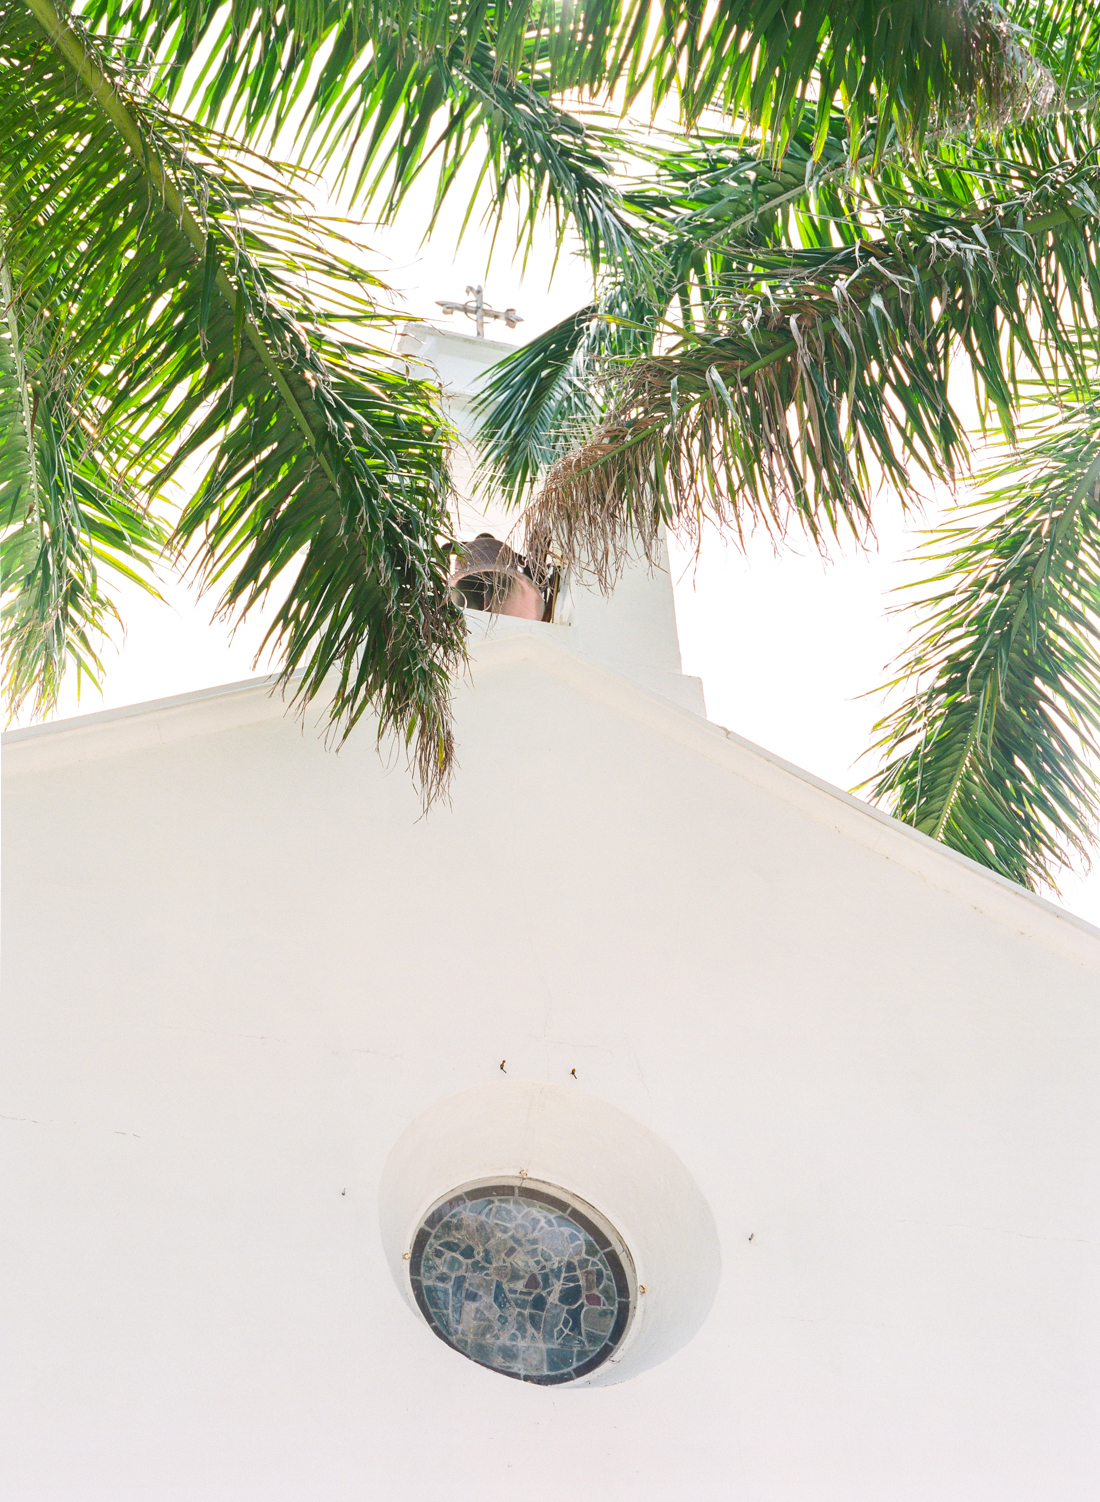 Boca Grande Wedding Photographer | Gasparilla Island Wedding | Molly Carr Photography | Destination Wedding | Film Photographer | Florida | Our Lady of Mercy Catholic Church Ceremony